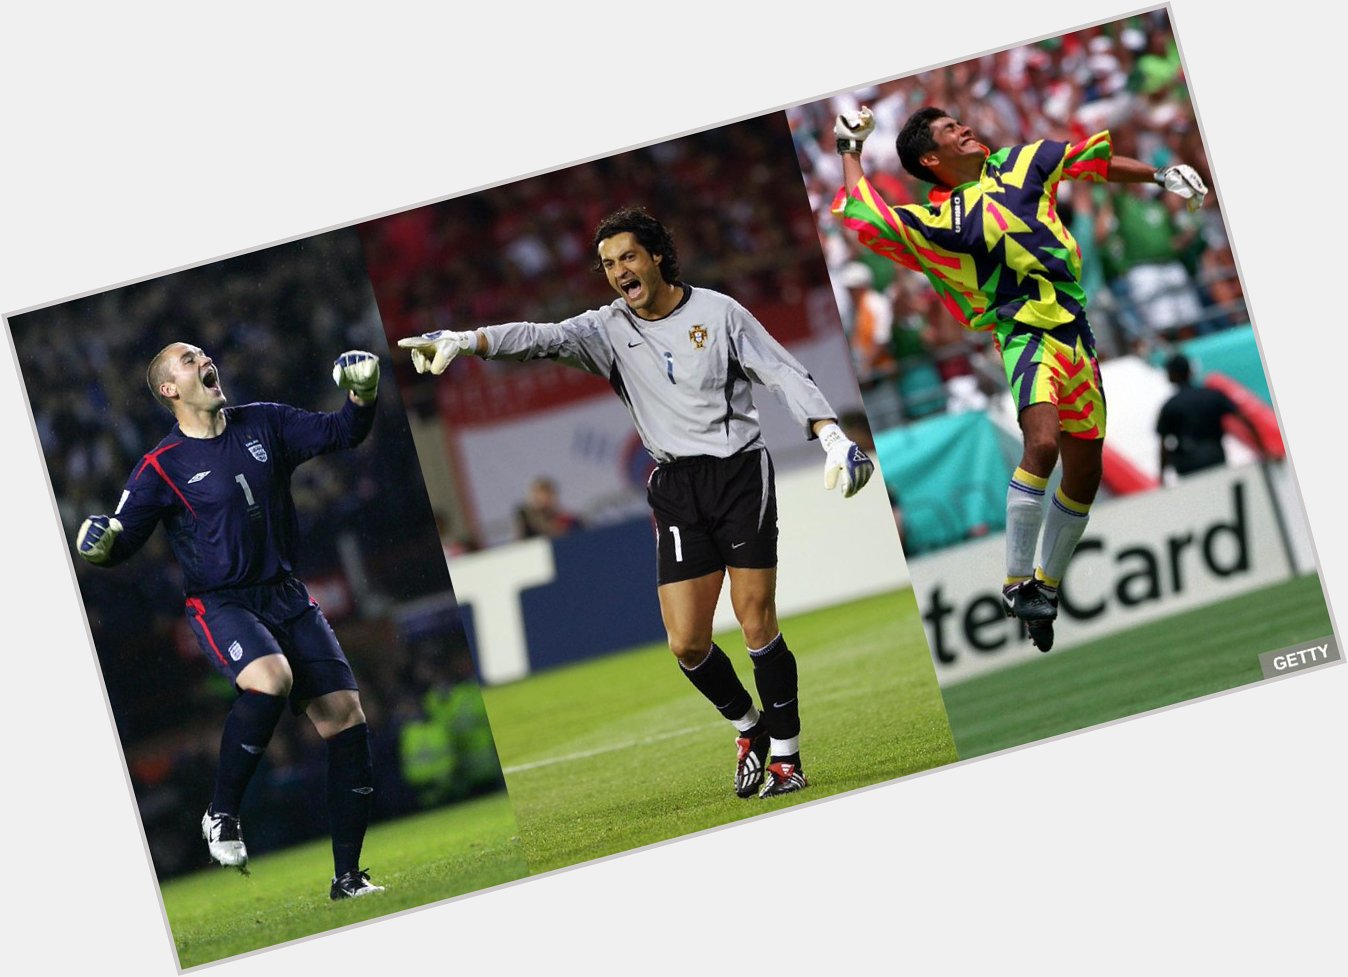  Happy Birthday to international goalkeepers Paul Robinson, Vítor Baía and Jorge Campos! 